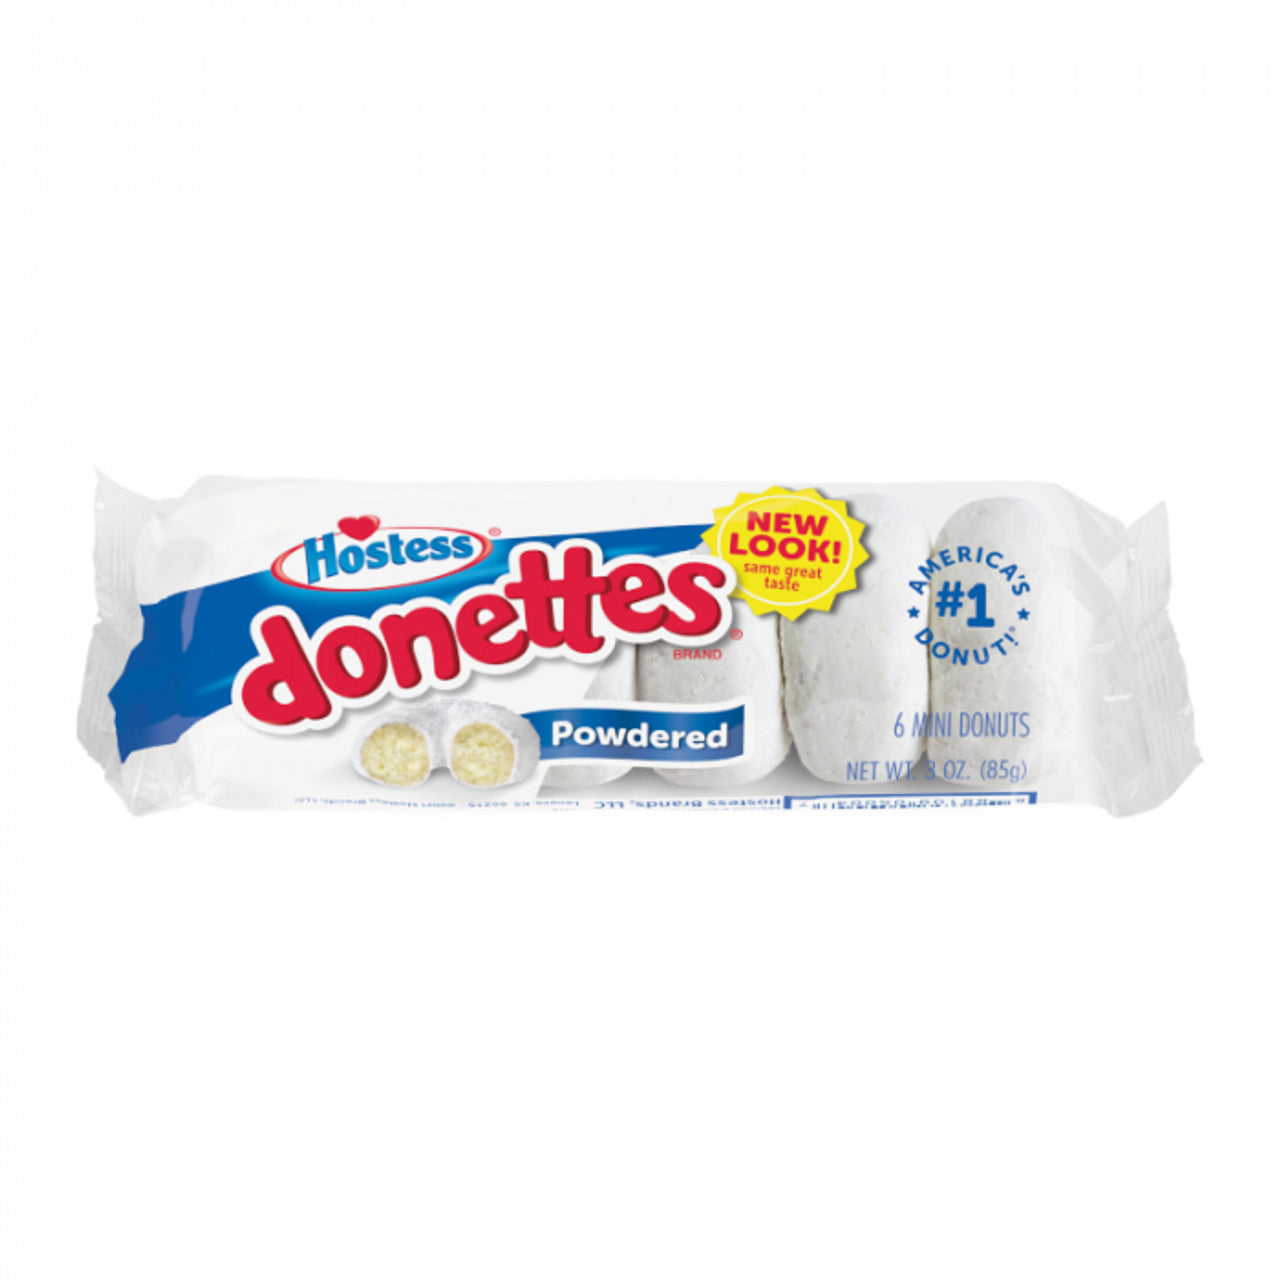 Hostess Powdered Donettes 10Pack  85g (USA)